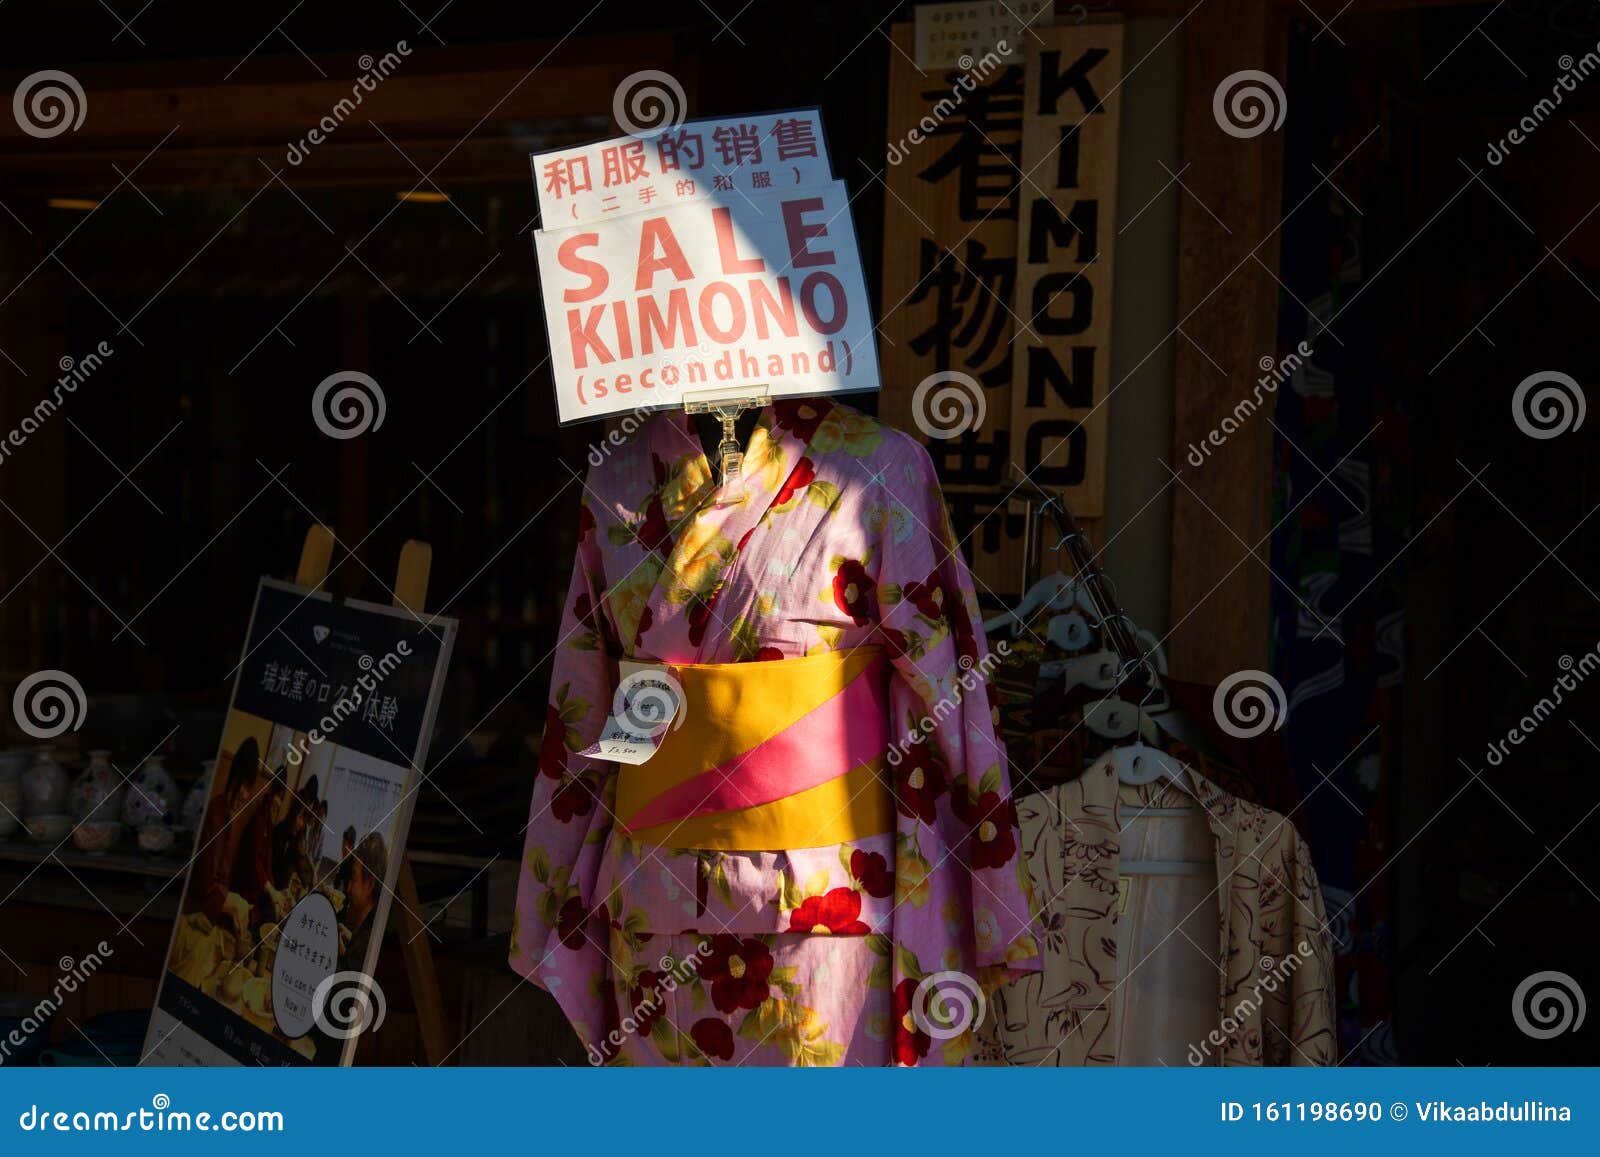 Mannequin In Kimono With Sign - Sale Kimono Second Hand ...